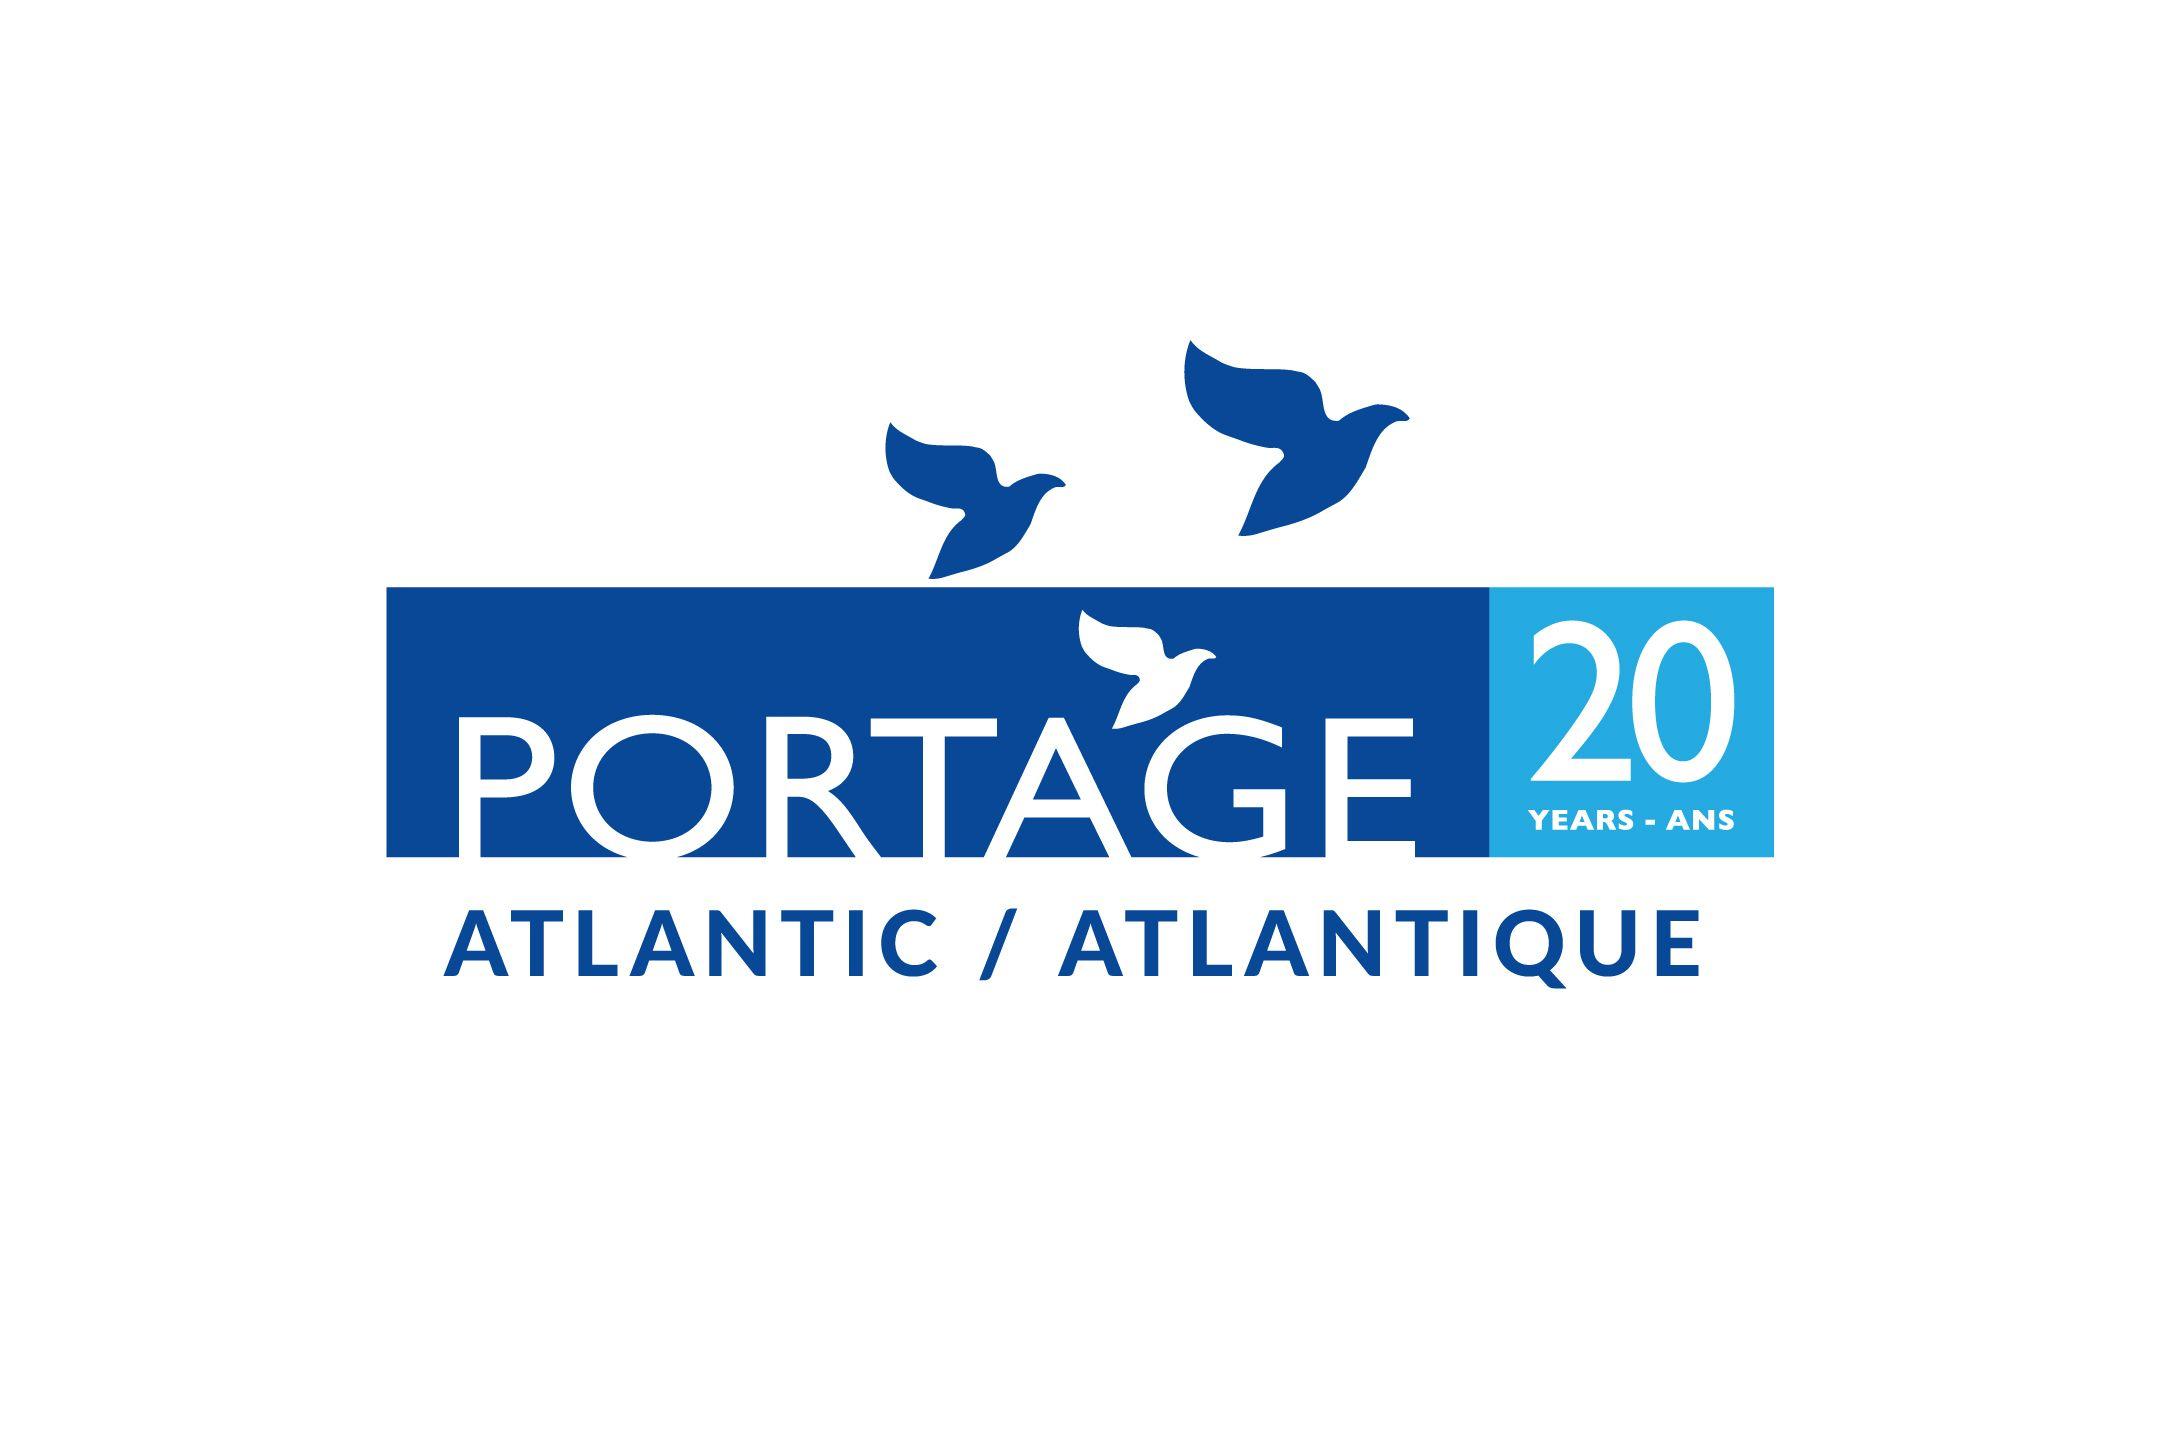 Portage Logo - Portage Atlantic 20 years